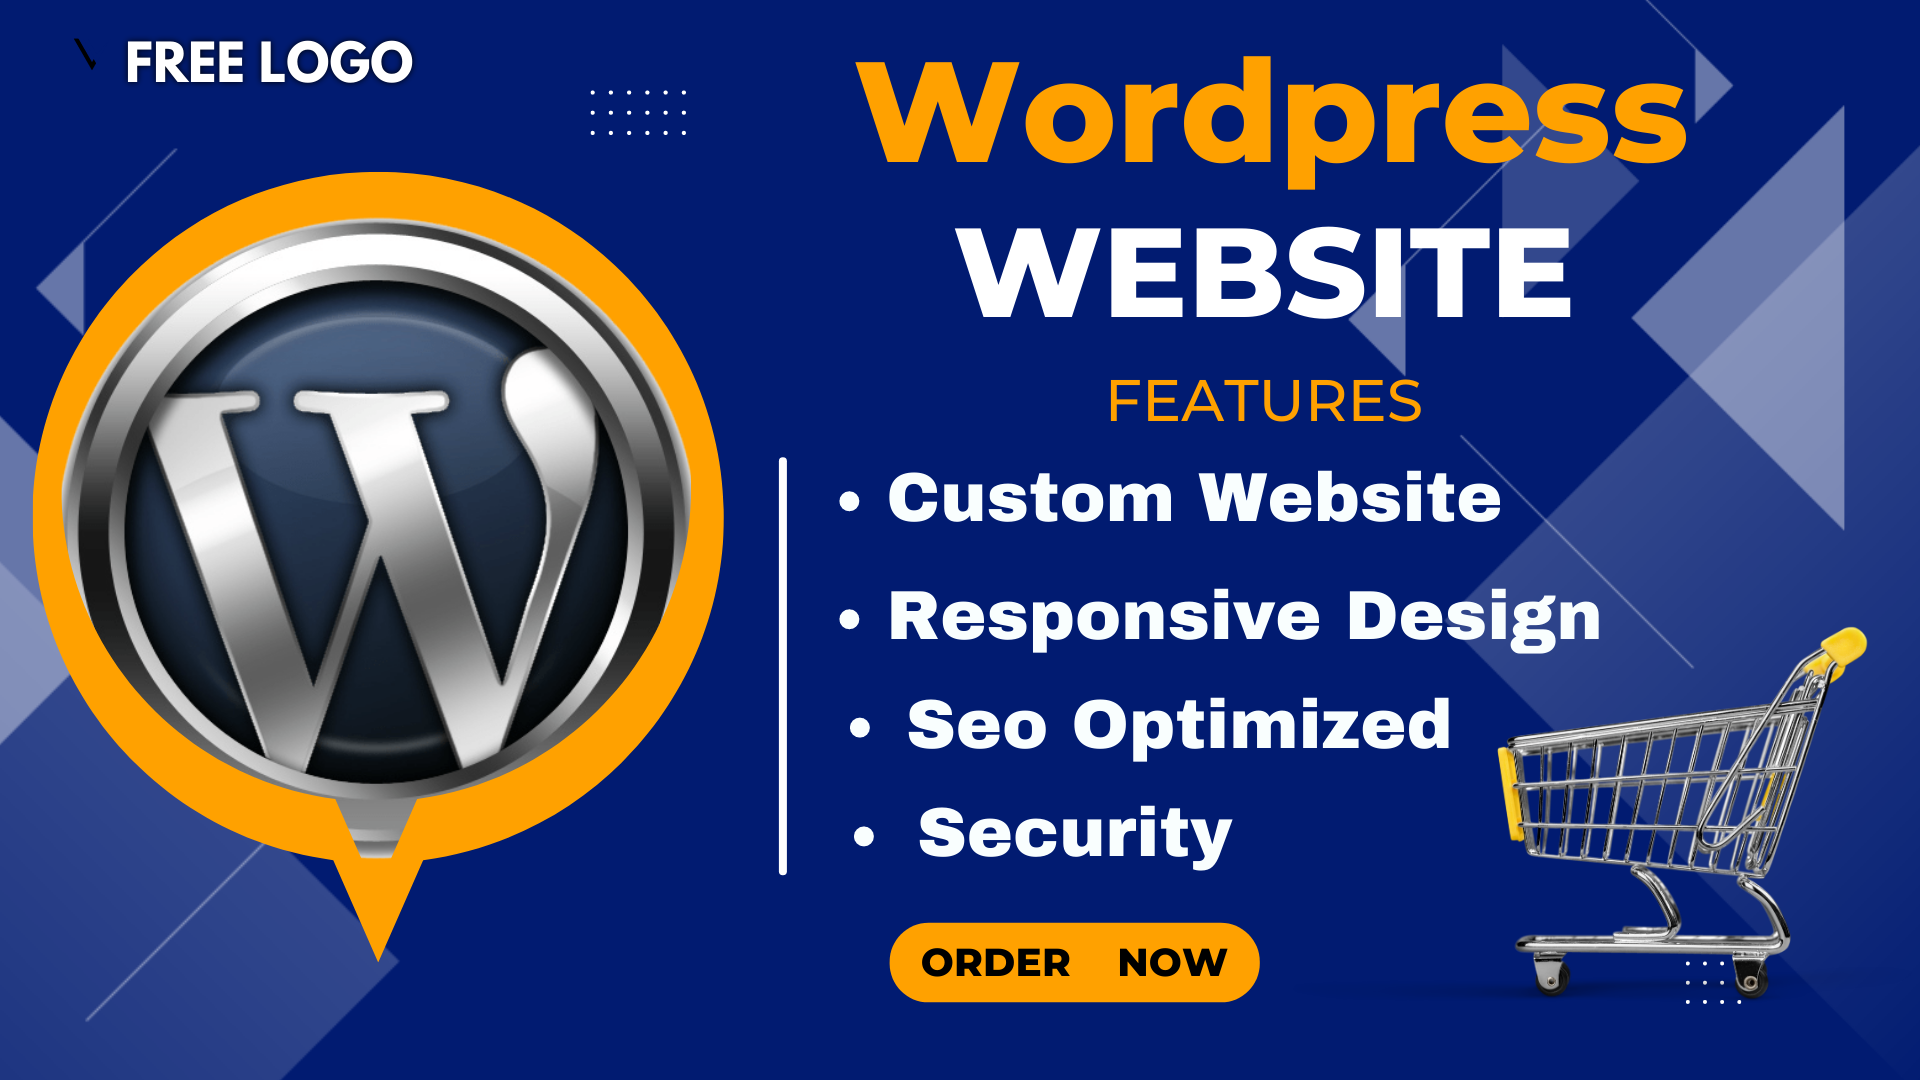 25485I will develop an eCommerce WordPress website